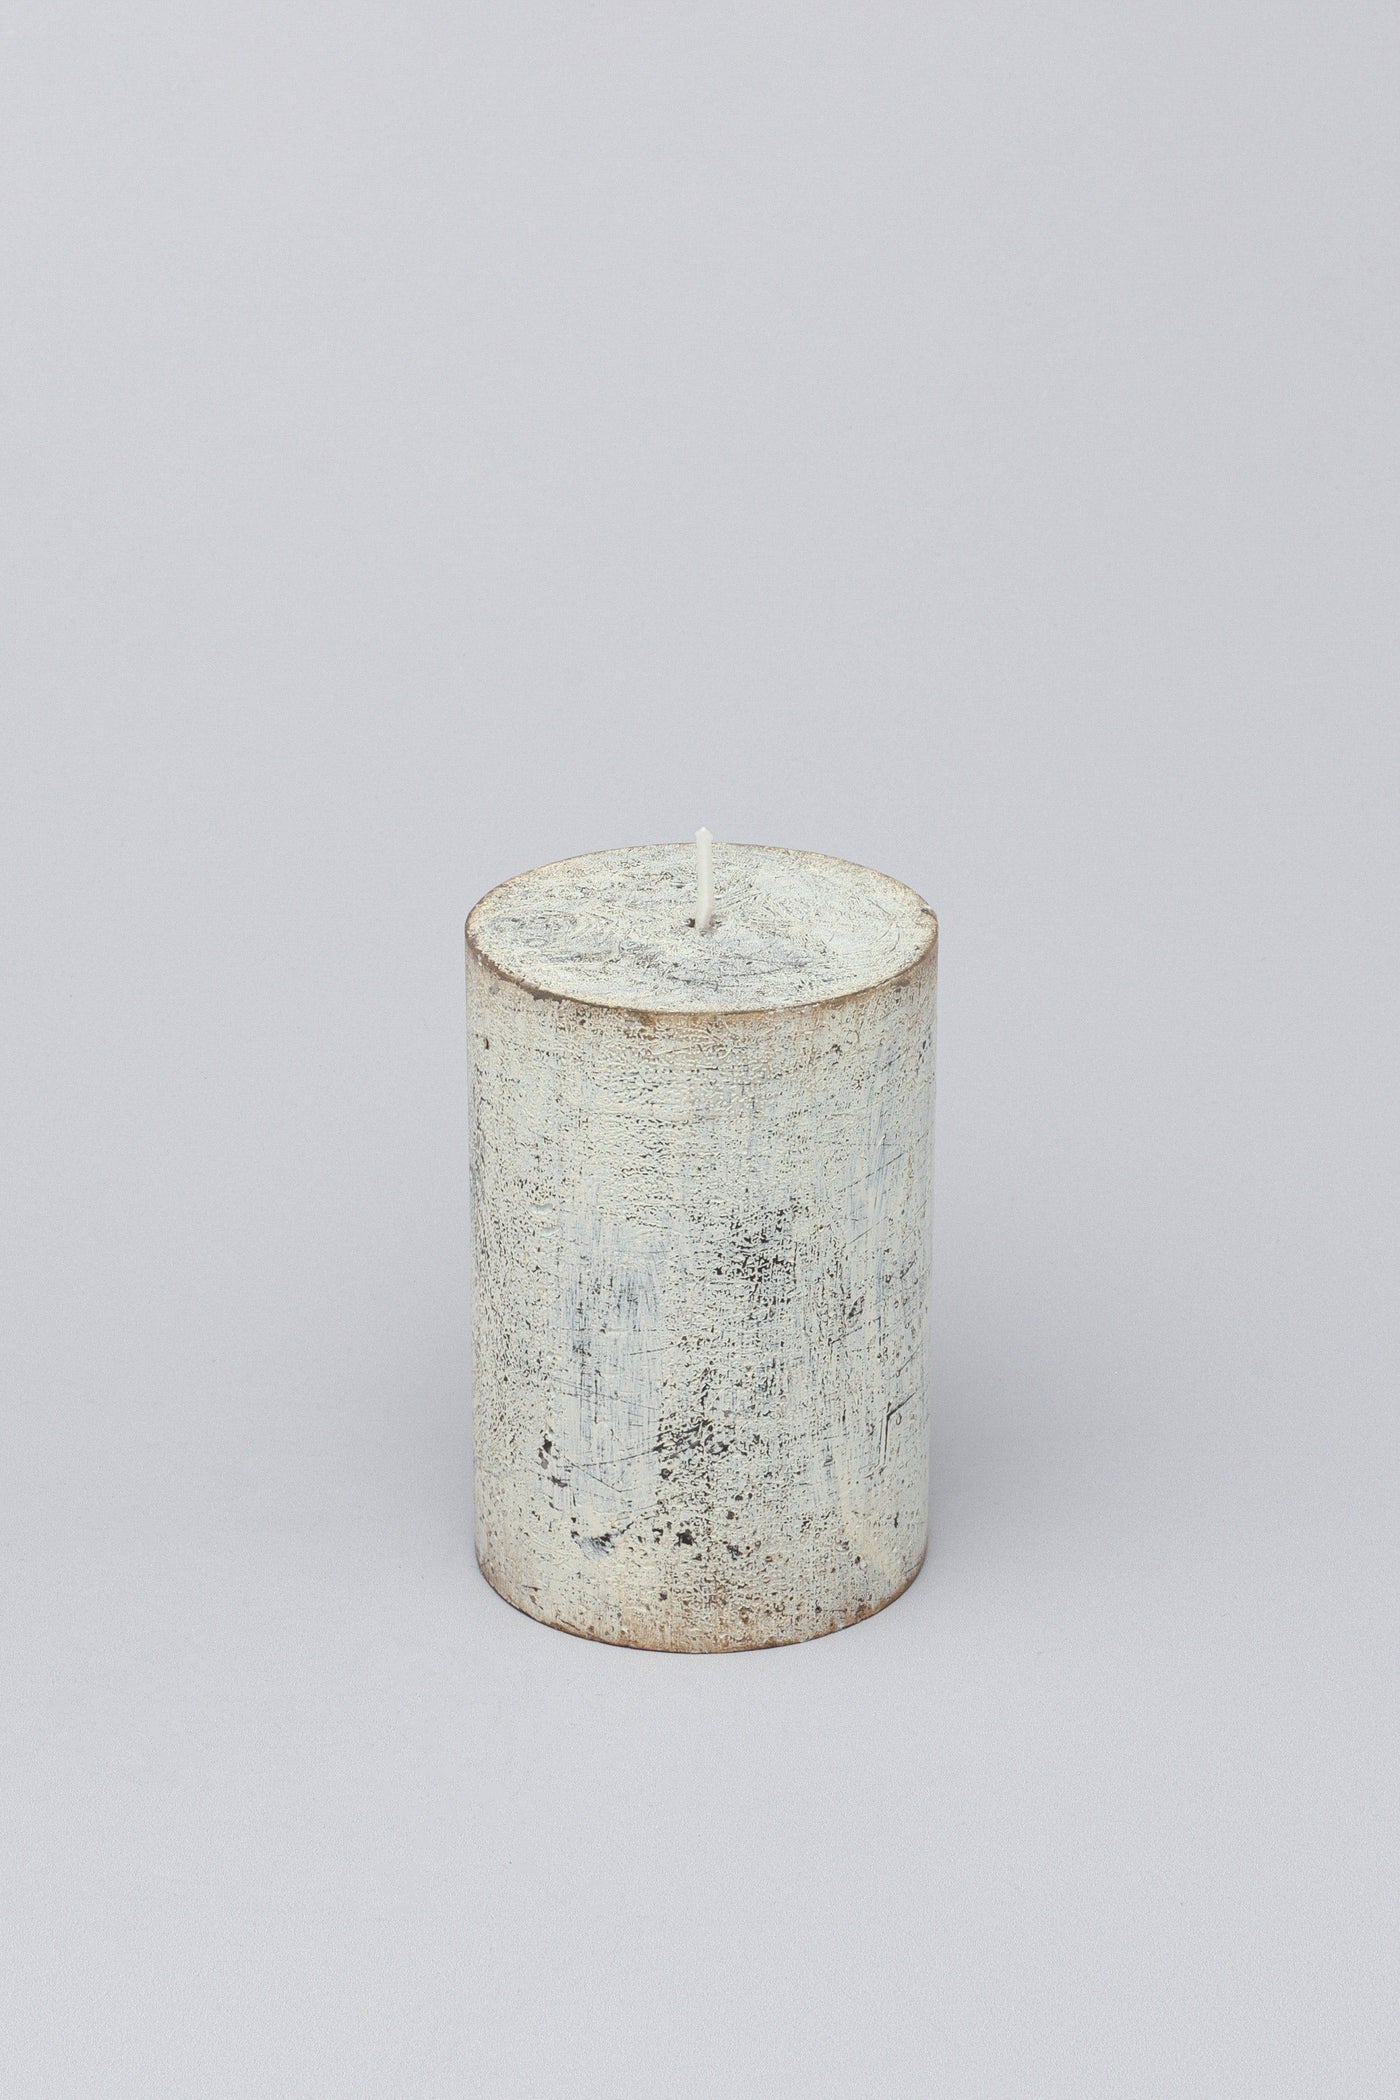 G Decor Candles Grey / Medium Vivian Antique Marble Beige Aged Two Tone Pillar Candle